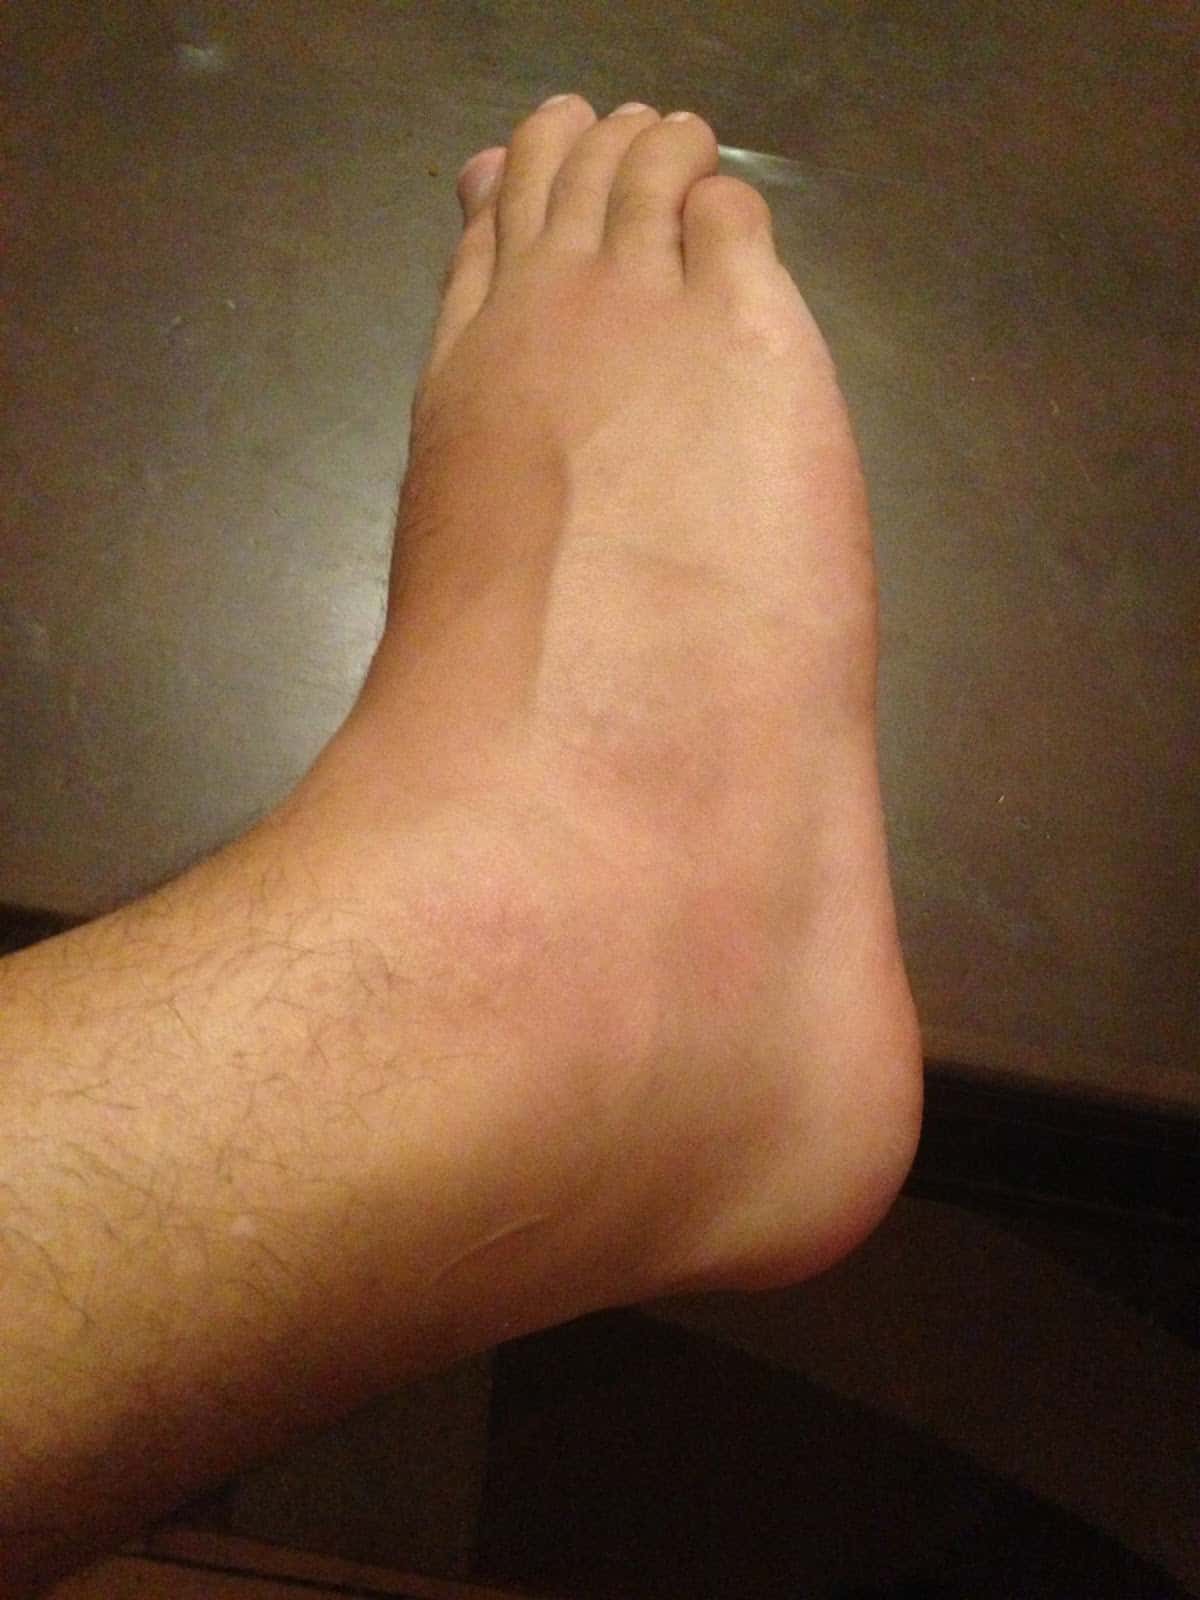 My foot at its worst in Moda, Kadıköy, İstanbul, Turkey